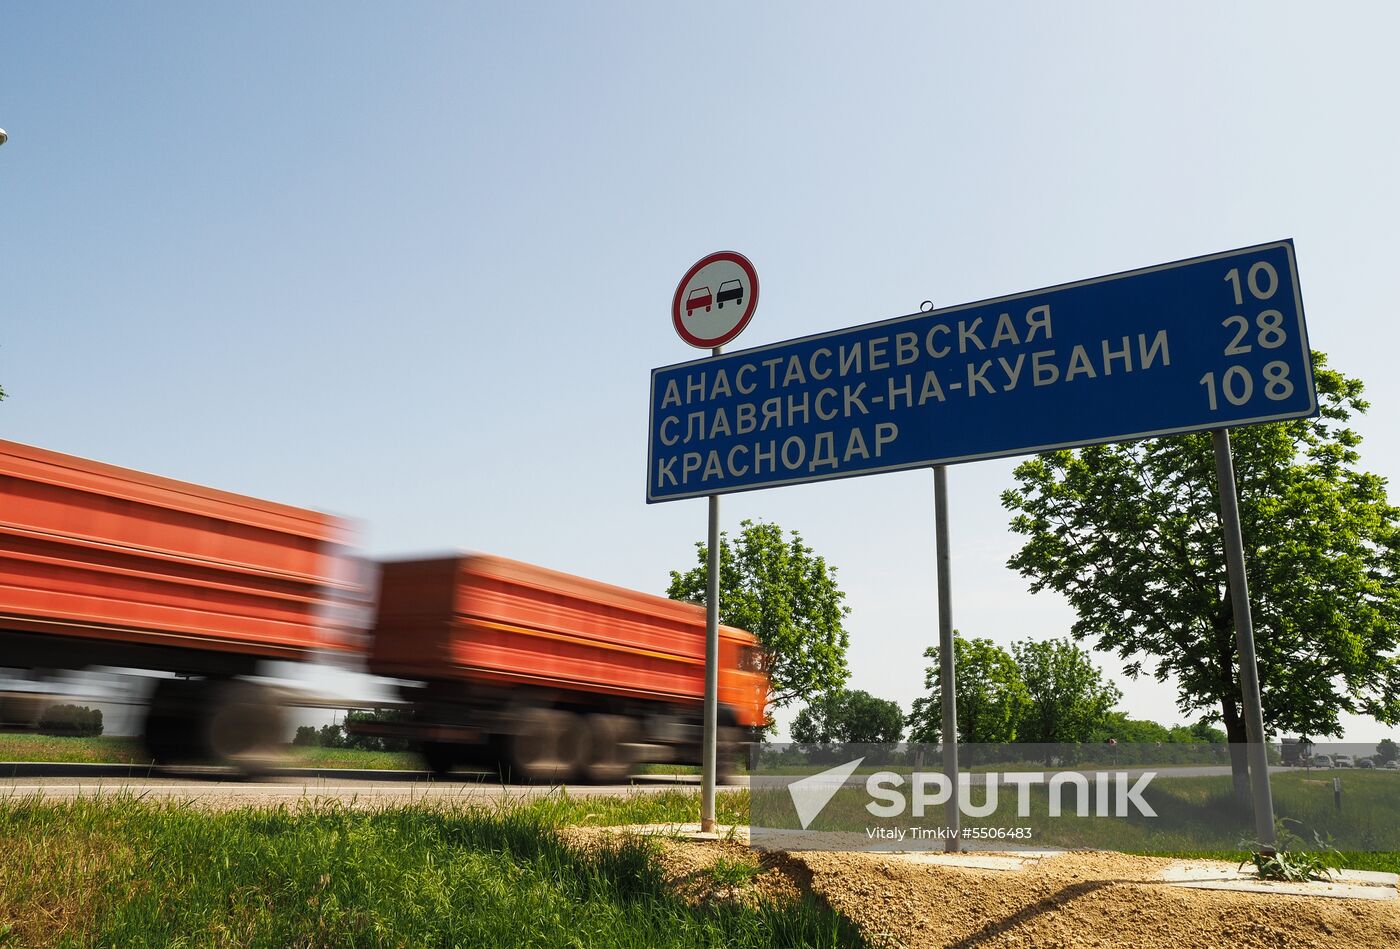 Krasnodar-Kerch motorway transferred into federral ownership